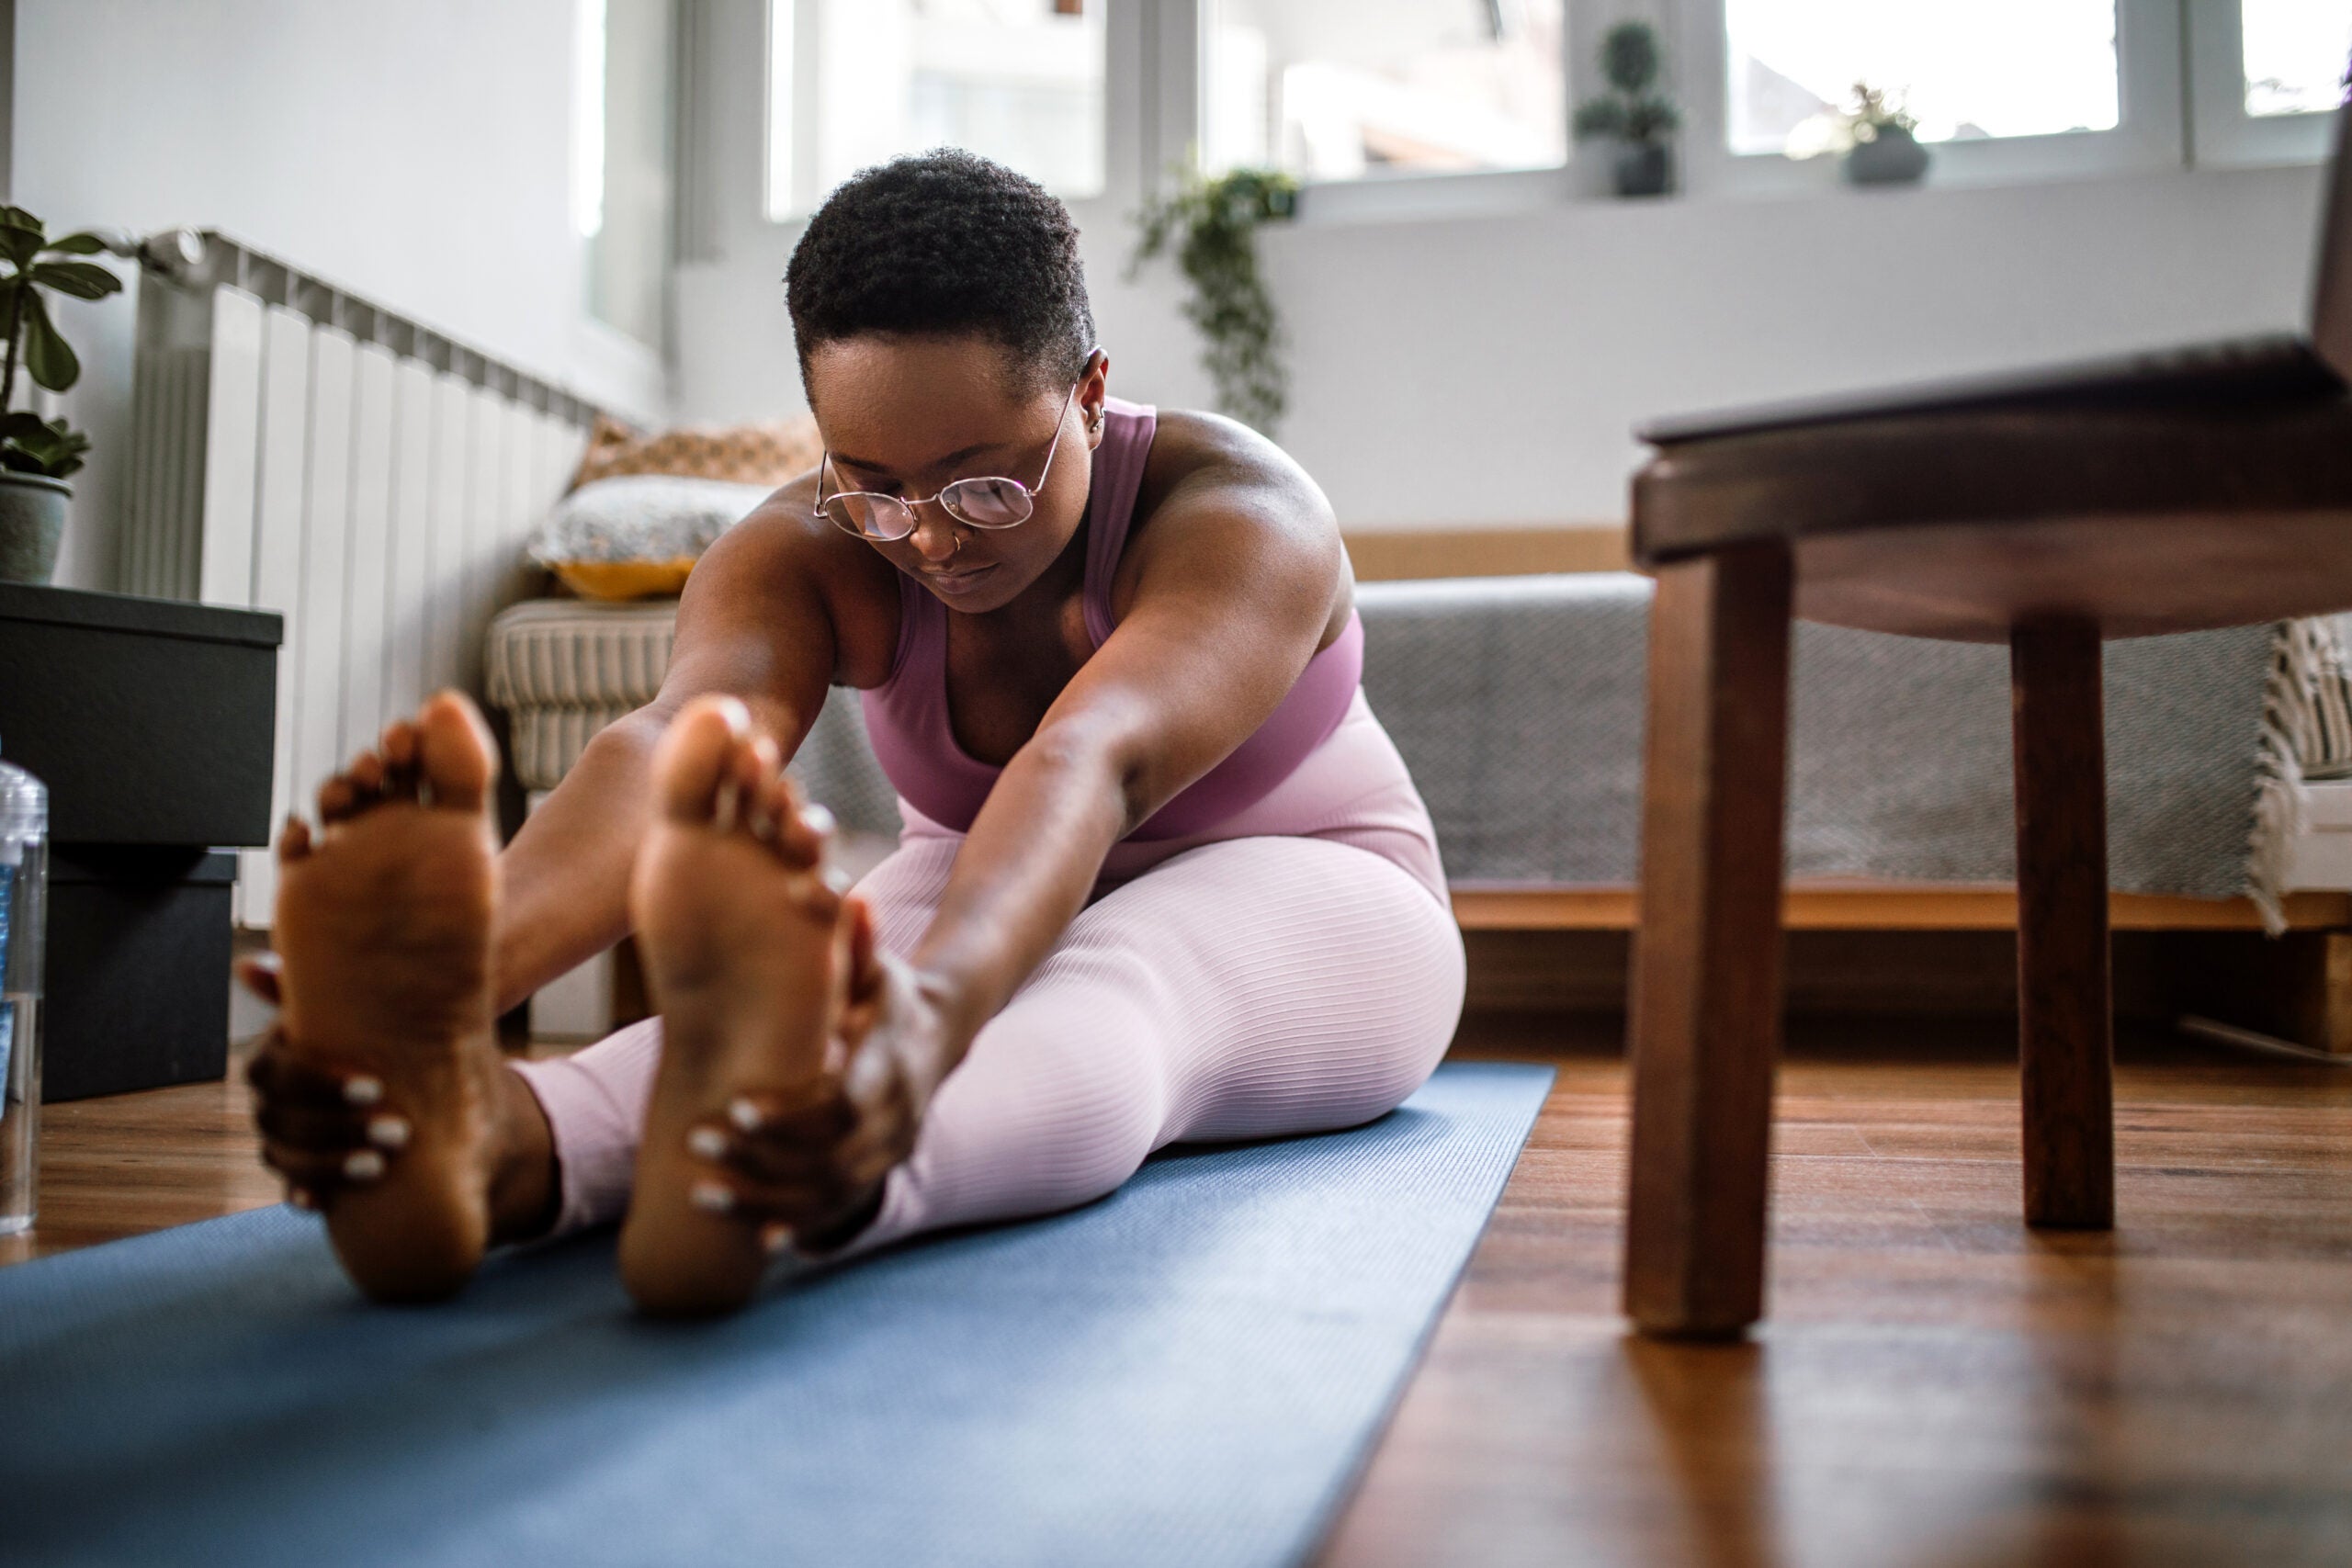 6 ways to stop sciatica pain with yoga | KSL.com